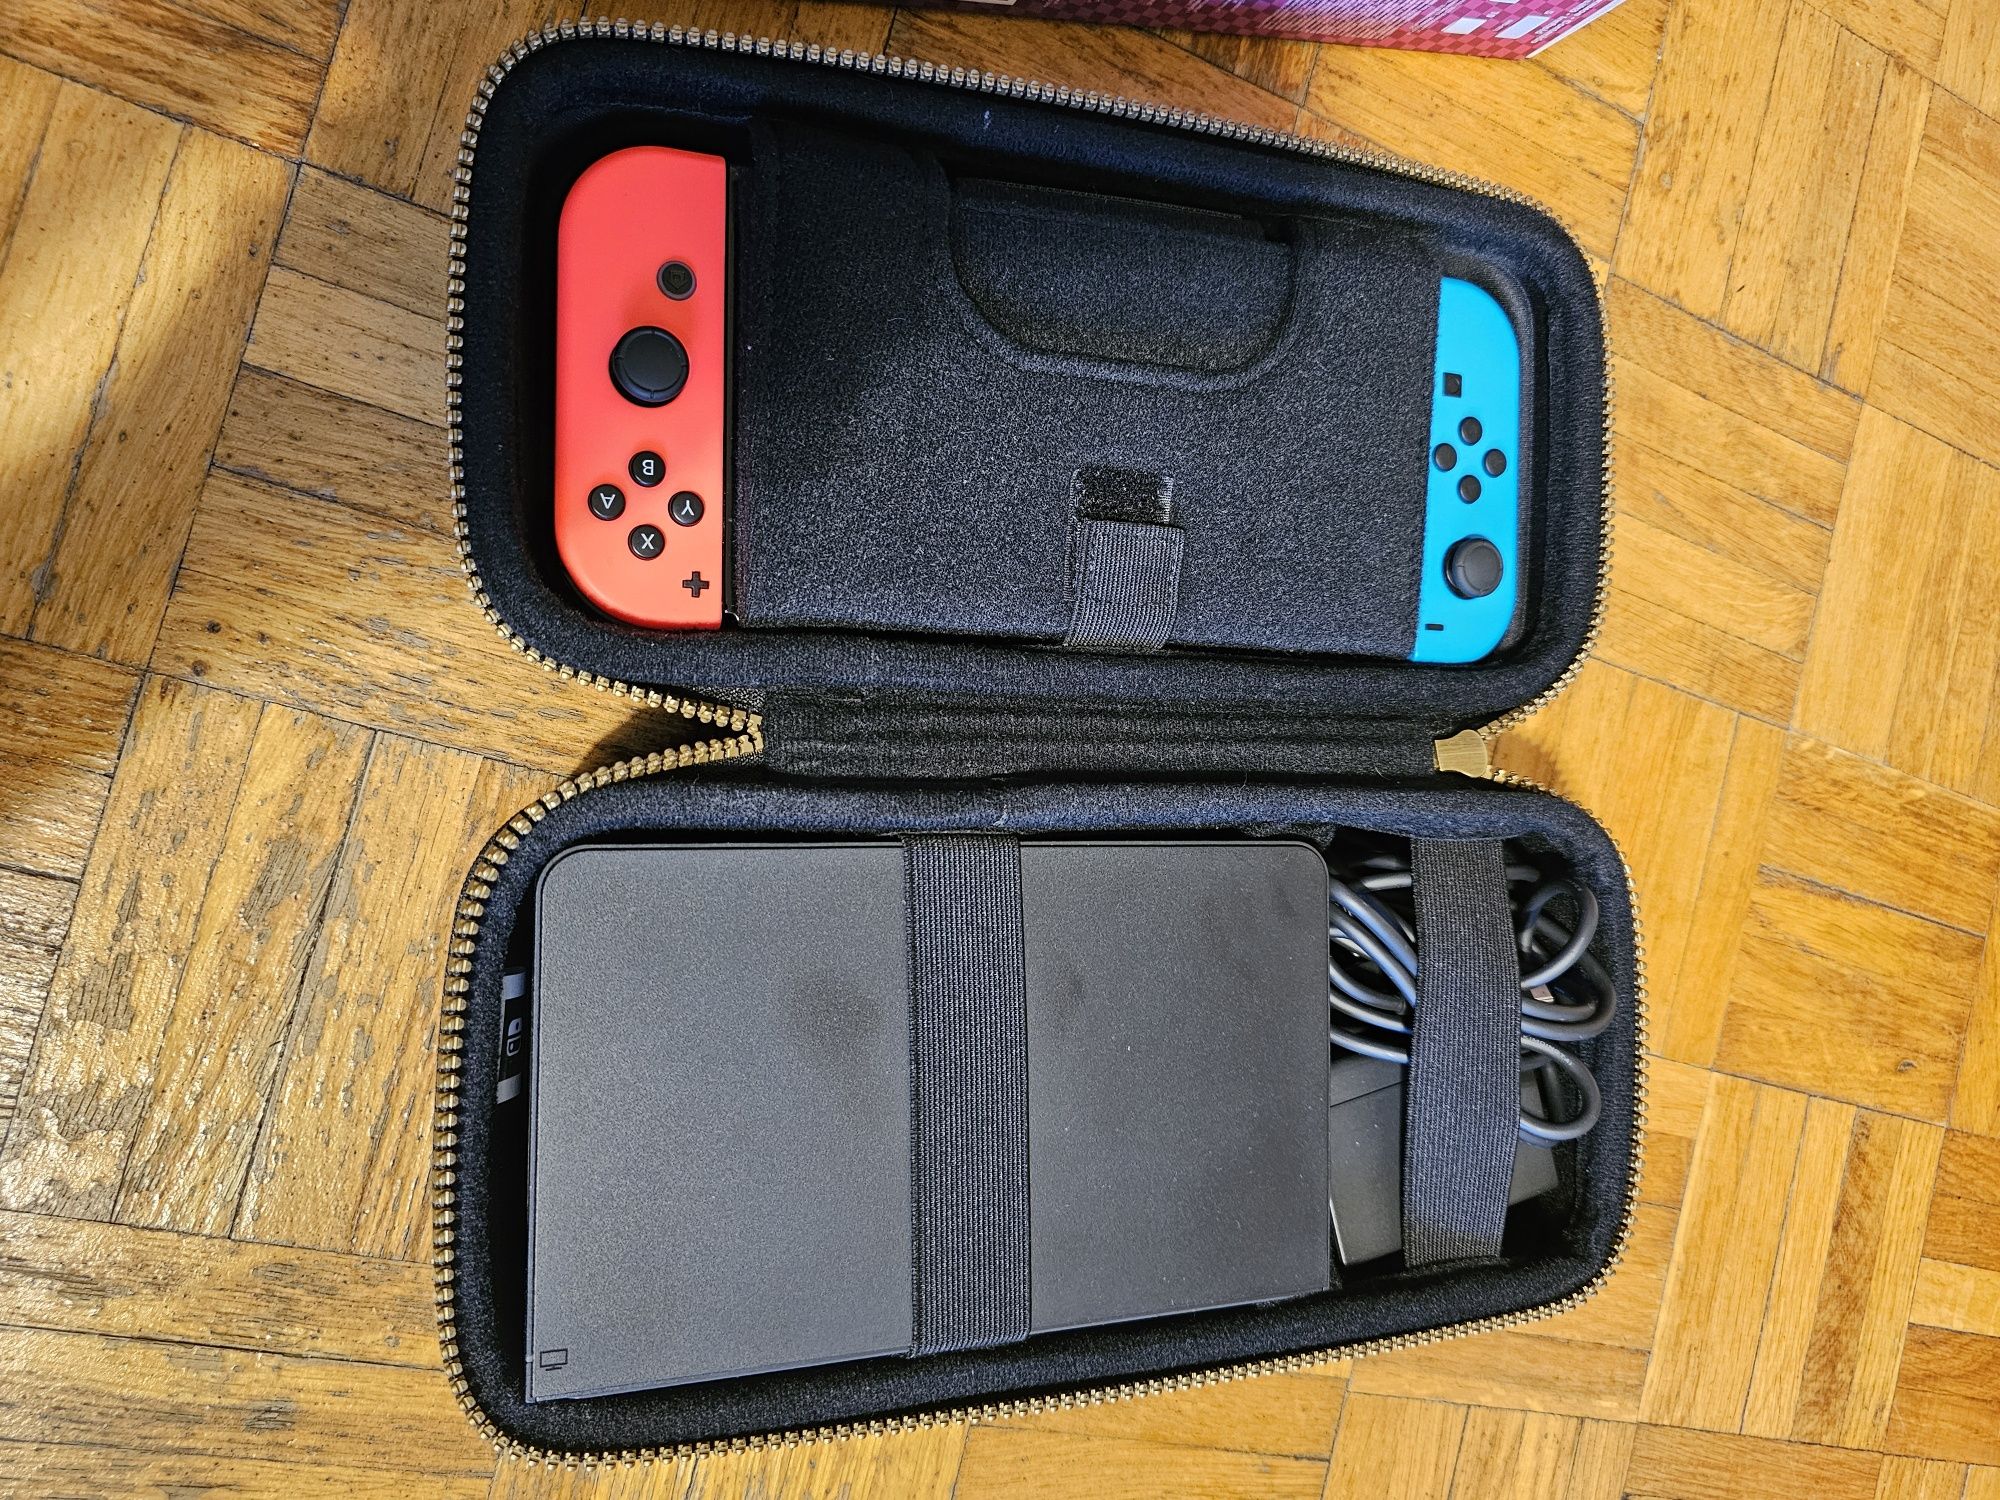 Konsola Nintendo Switch OLED Neon blue-red, komplet, etui, dobre gry